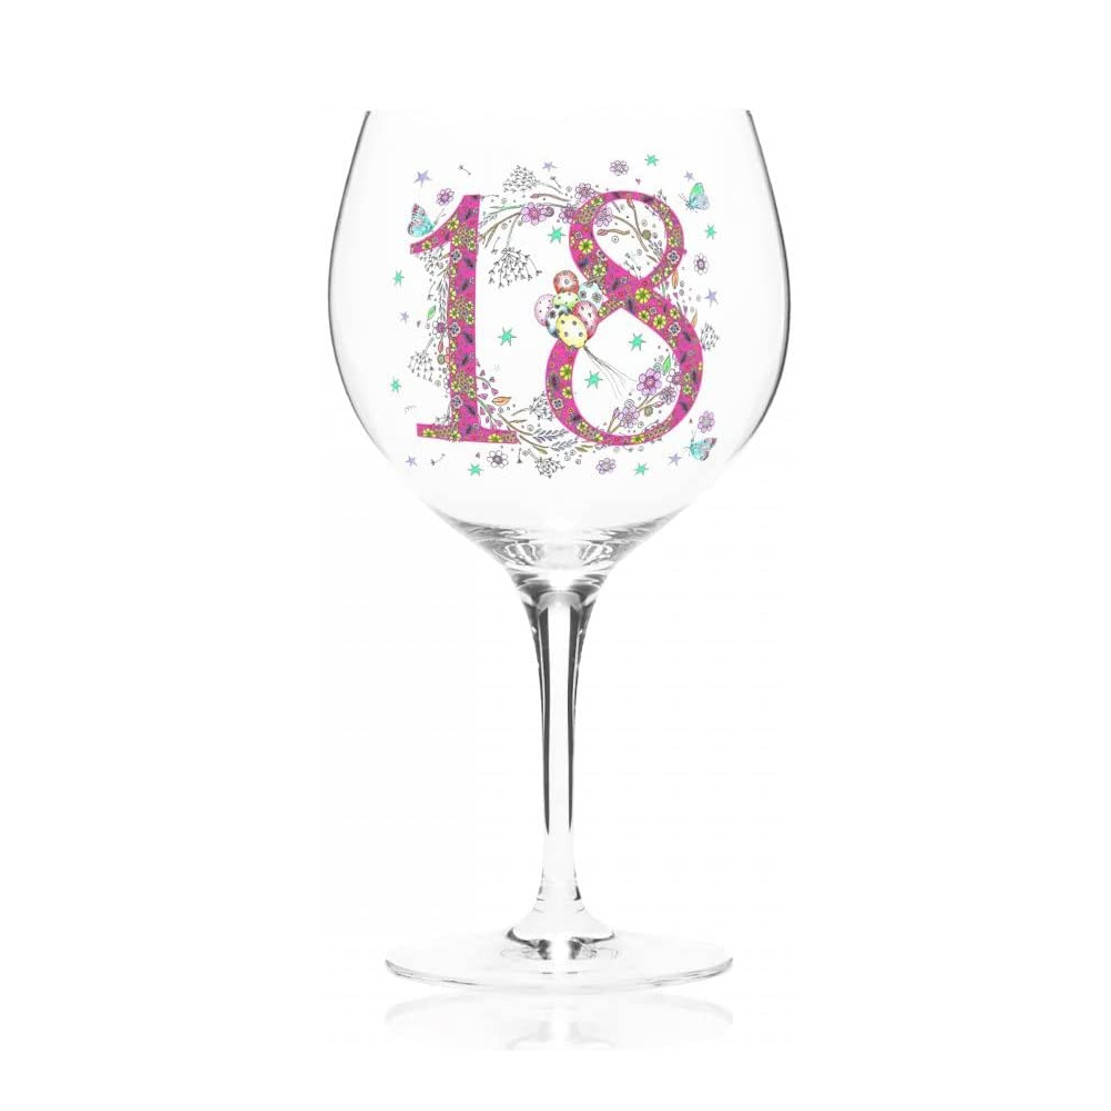 Doodleicious Art - 18th Birthday Celebration Wine / Gin Glass